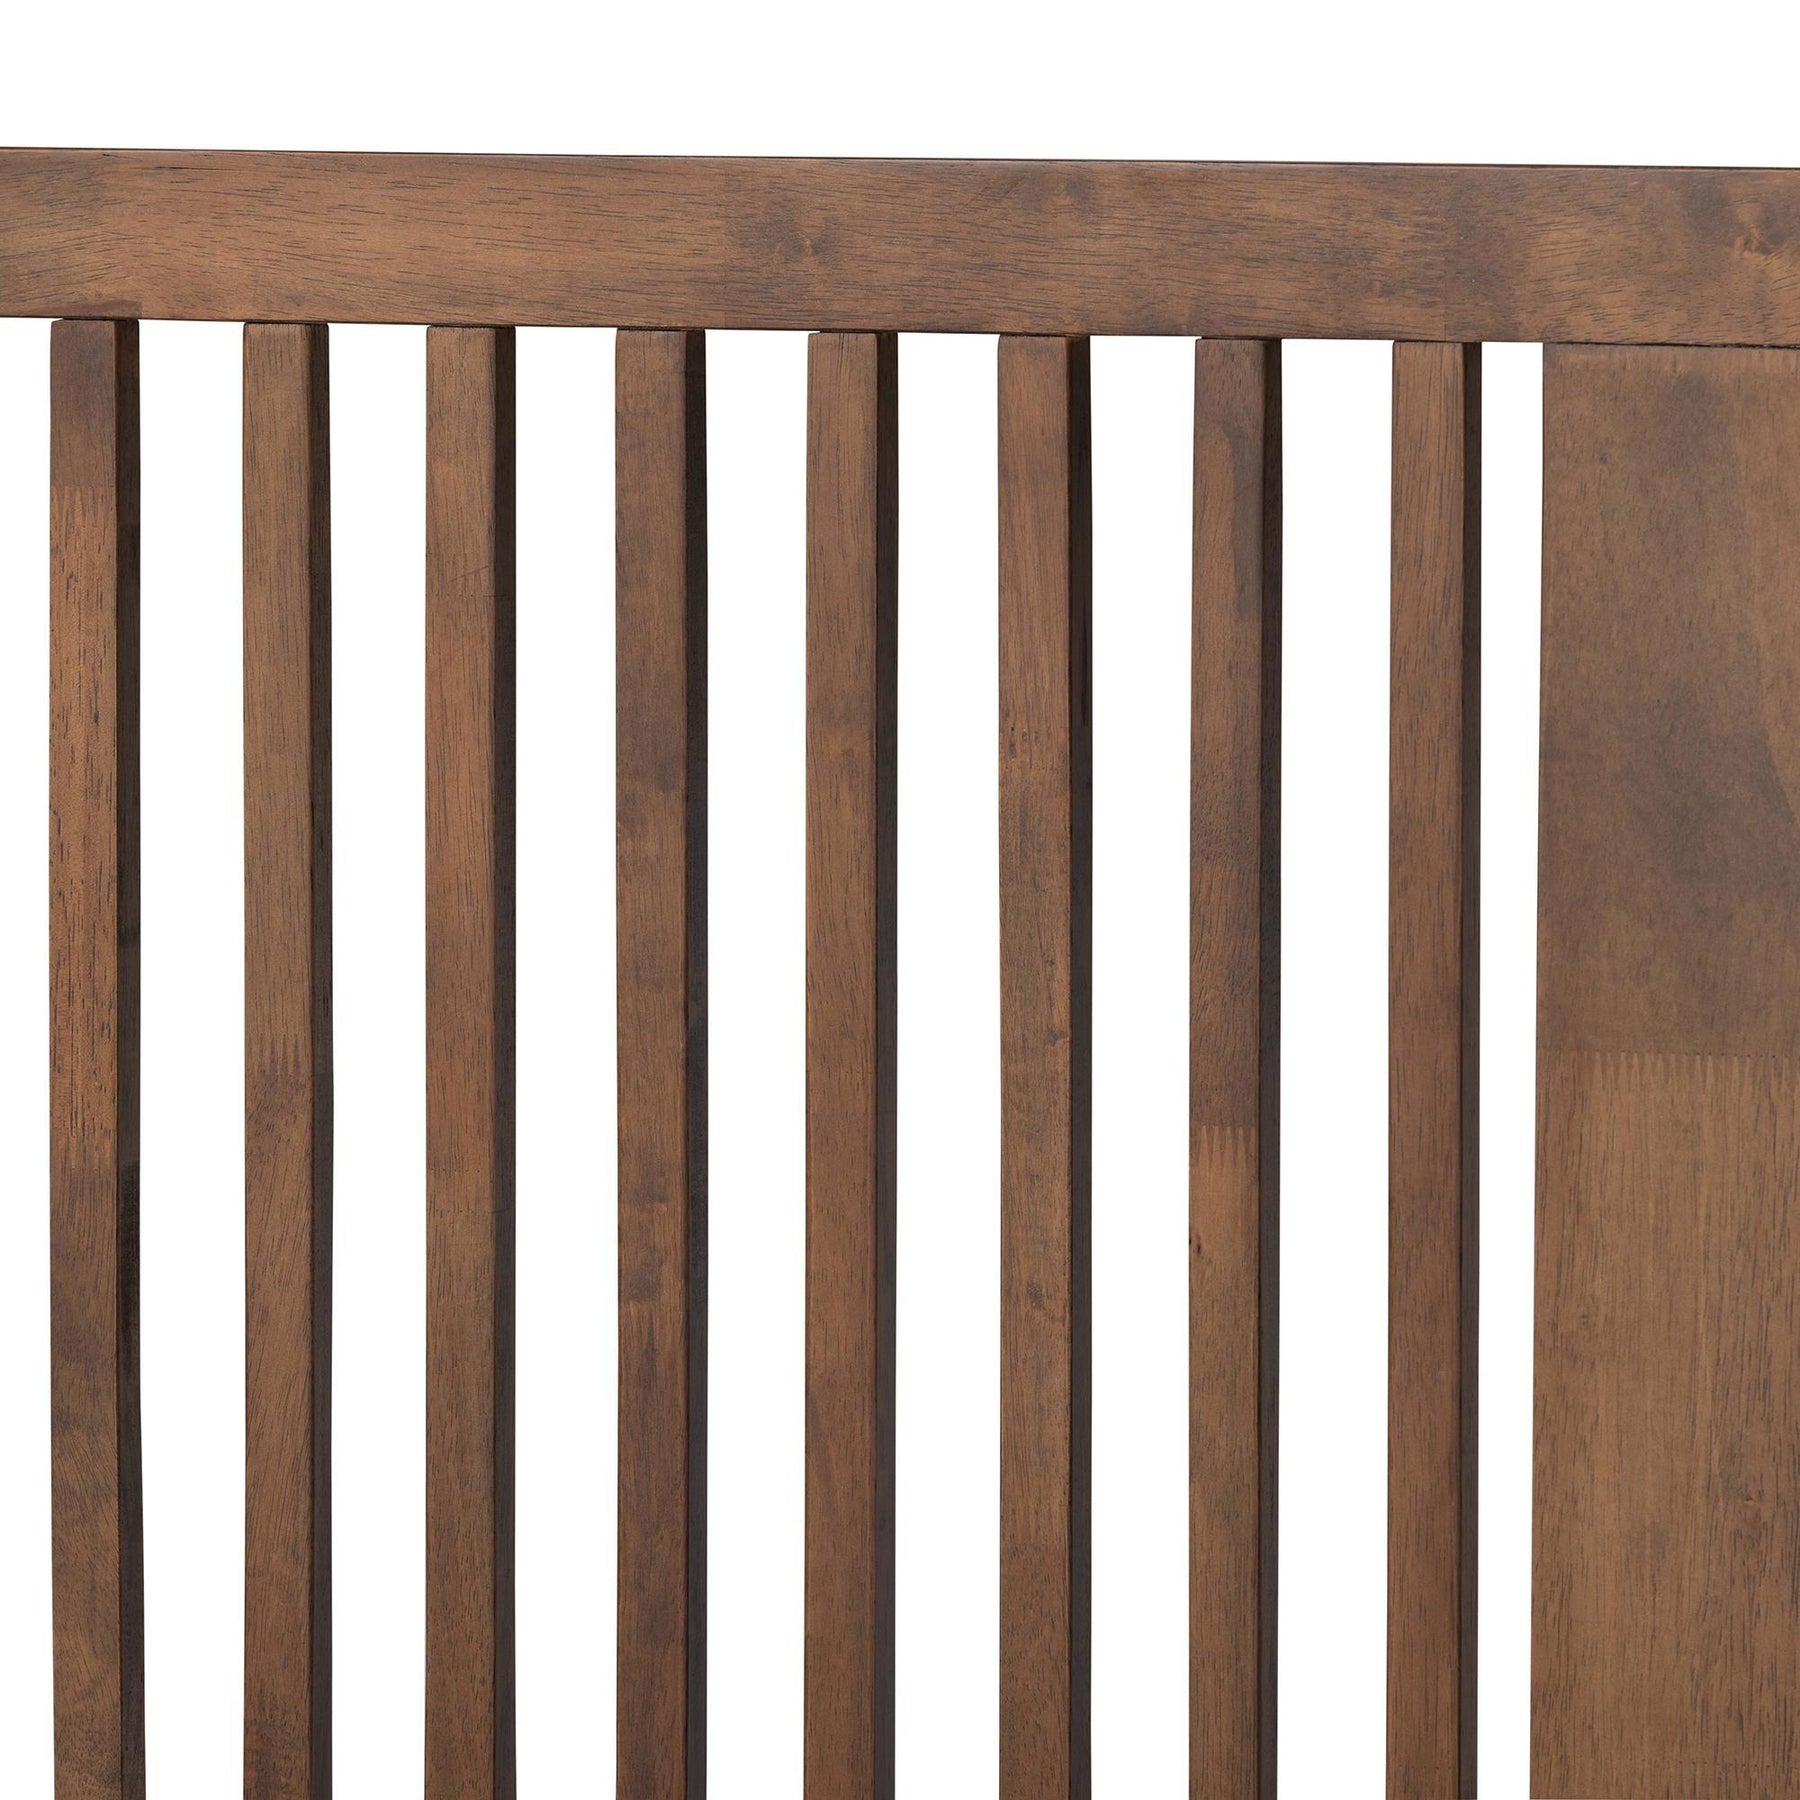 Baxton Studio Kioshi Mid-Century Modern Transitional Ash Walnut Finished Wood Full Size Platform Bed - Kioshi-Ash Walnut-Full